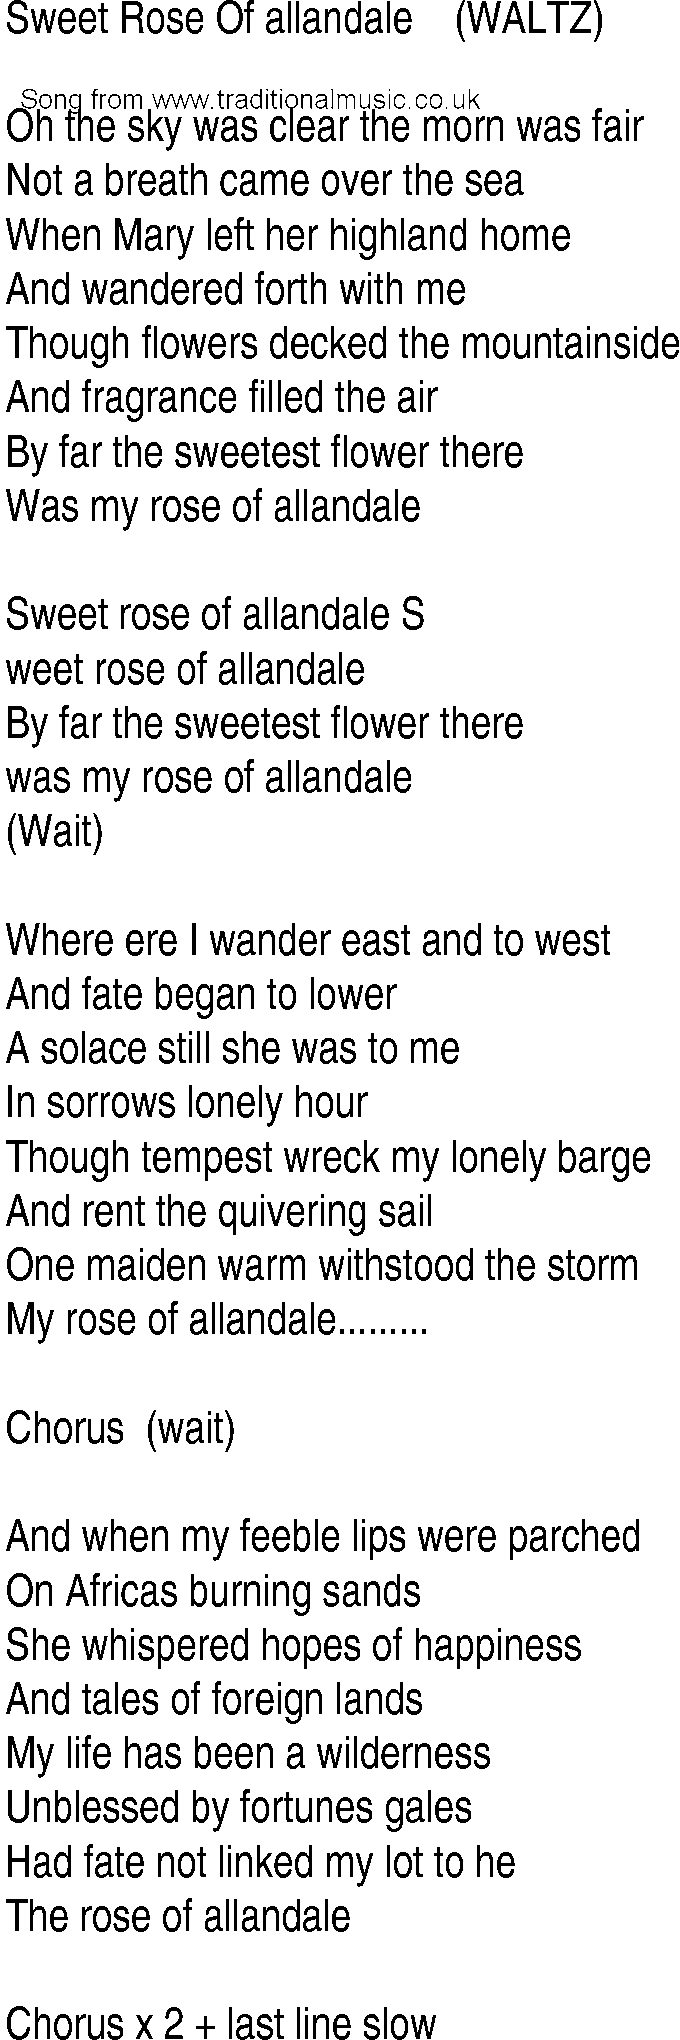 eluveitie a rose for epona lyrics a rose for epona